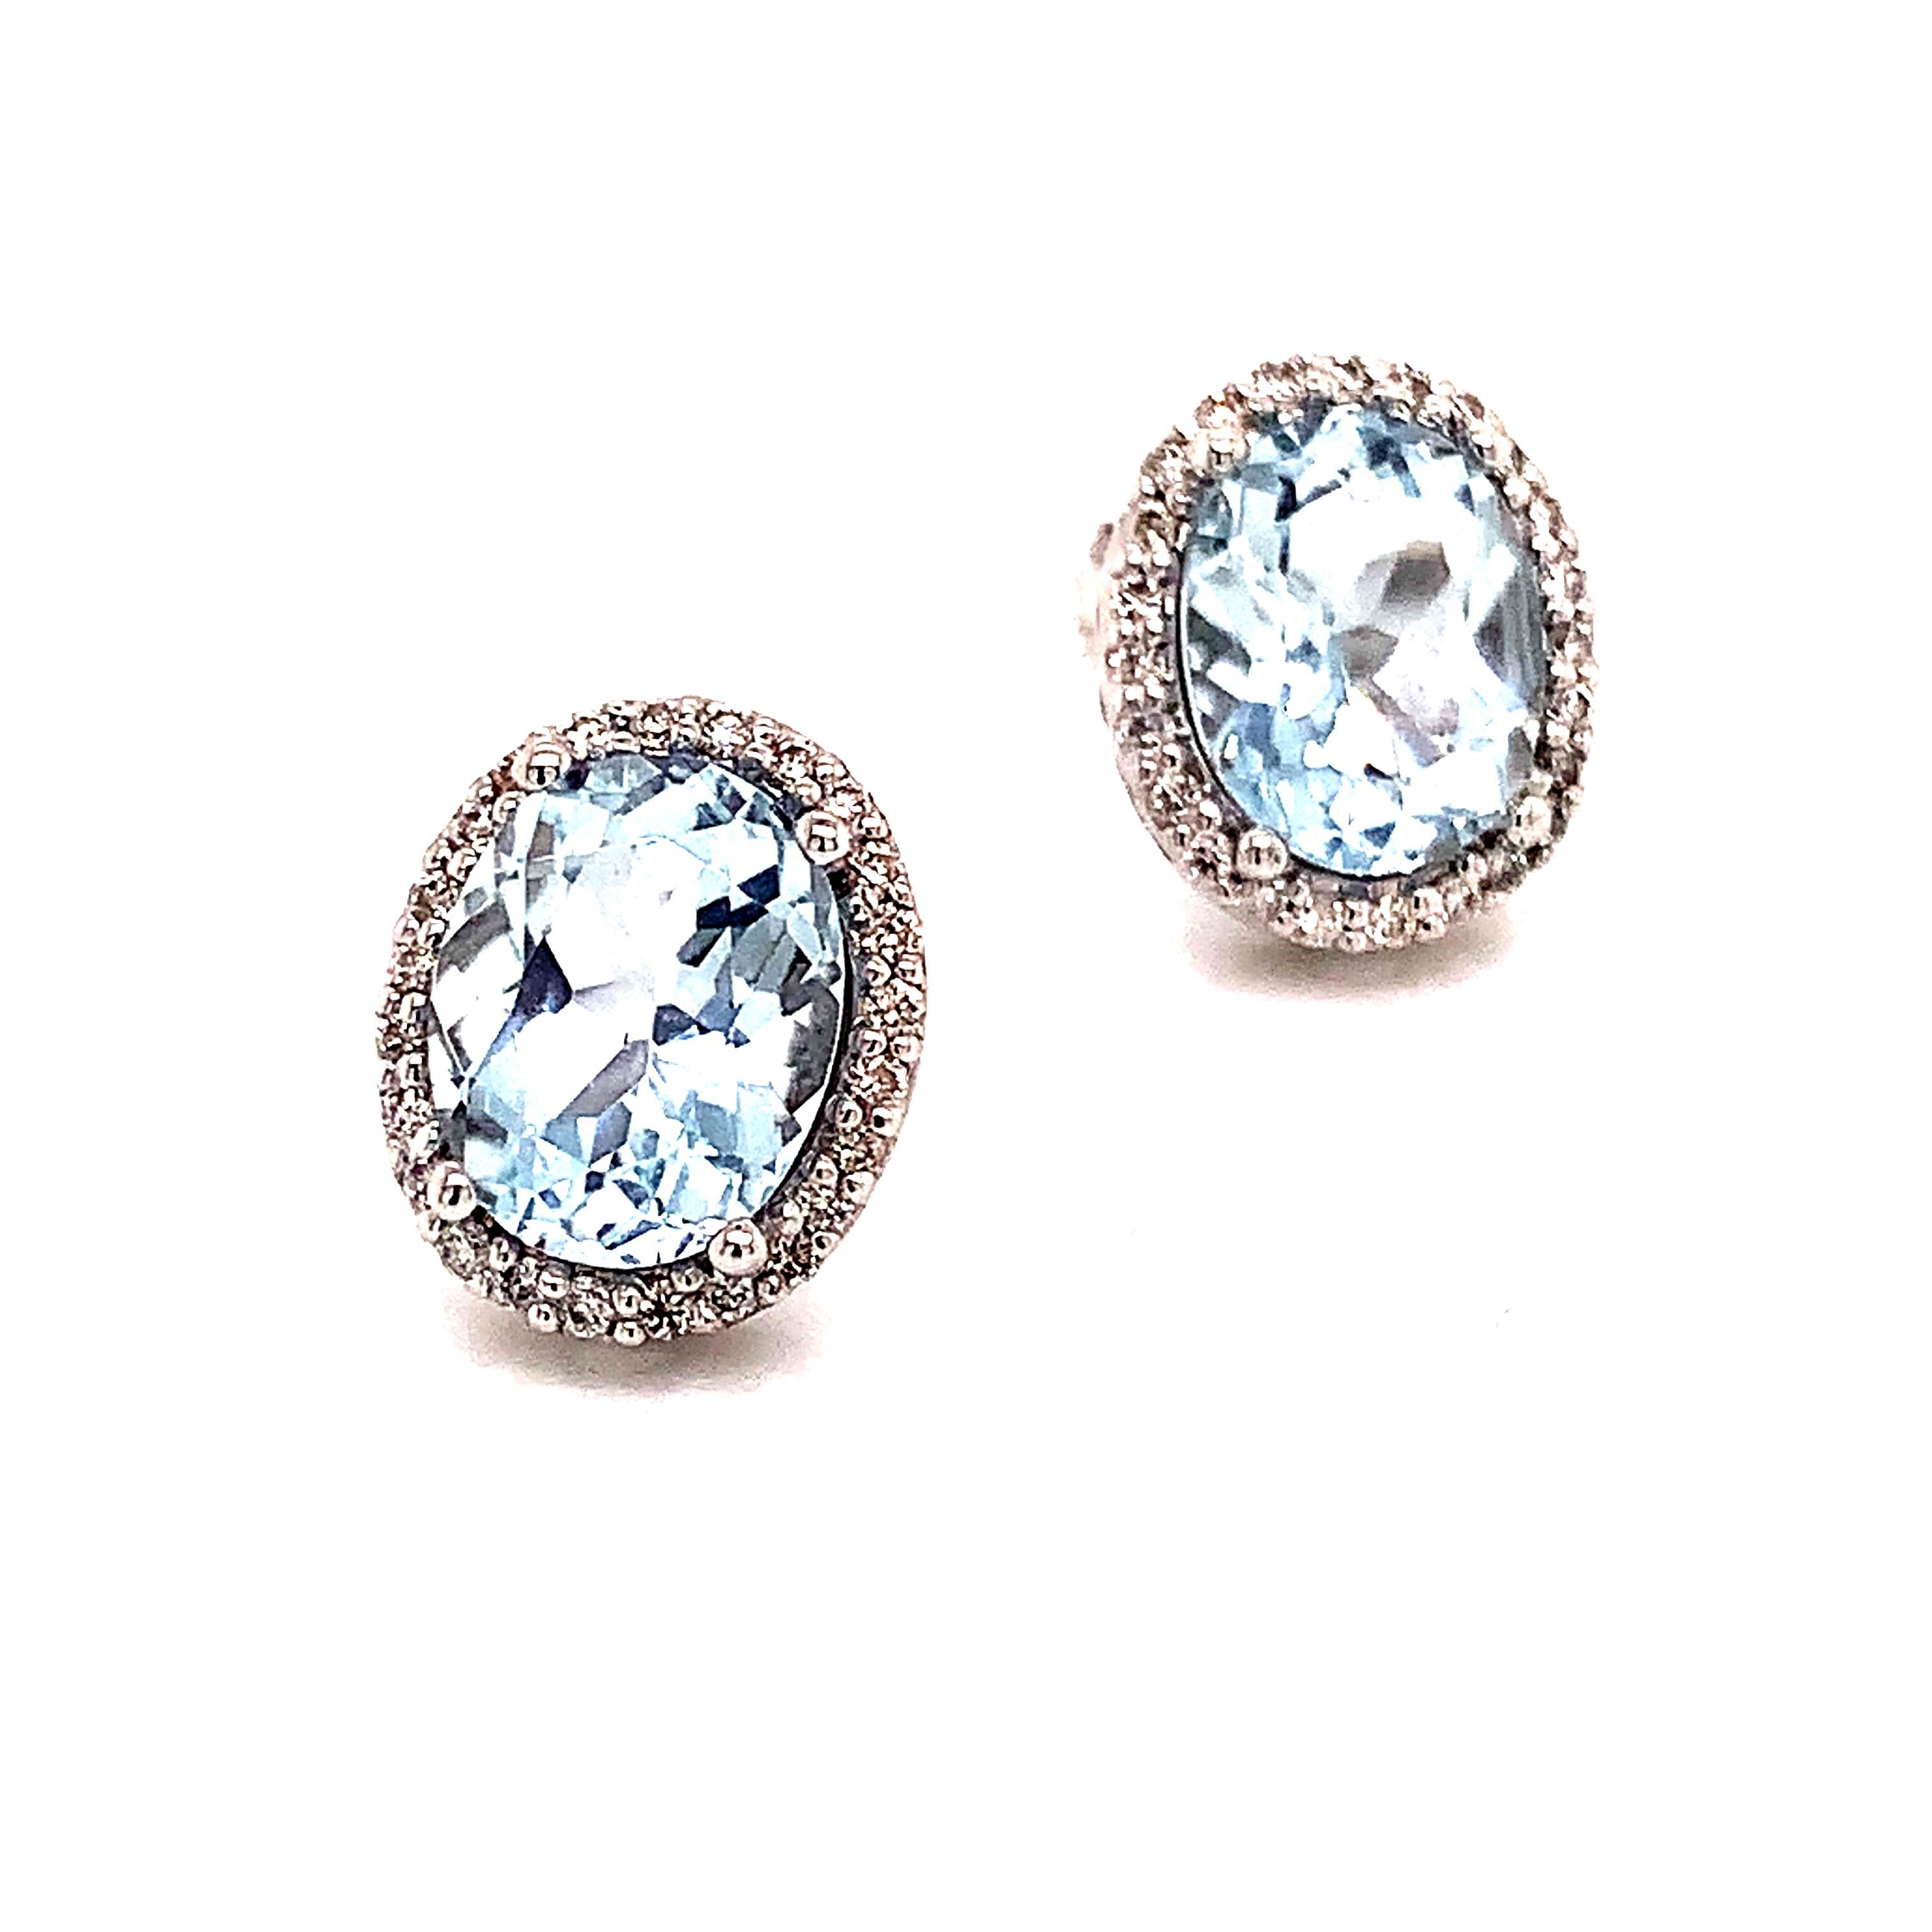 Natural Aquamarine Diamond Stud Earrings 14k WG 5.46 TCW Certified For Sale 5